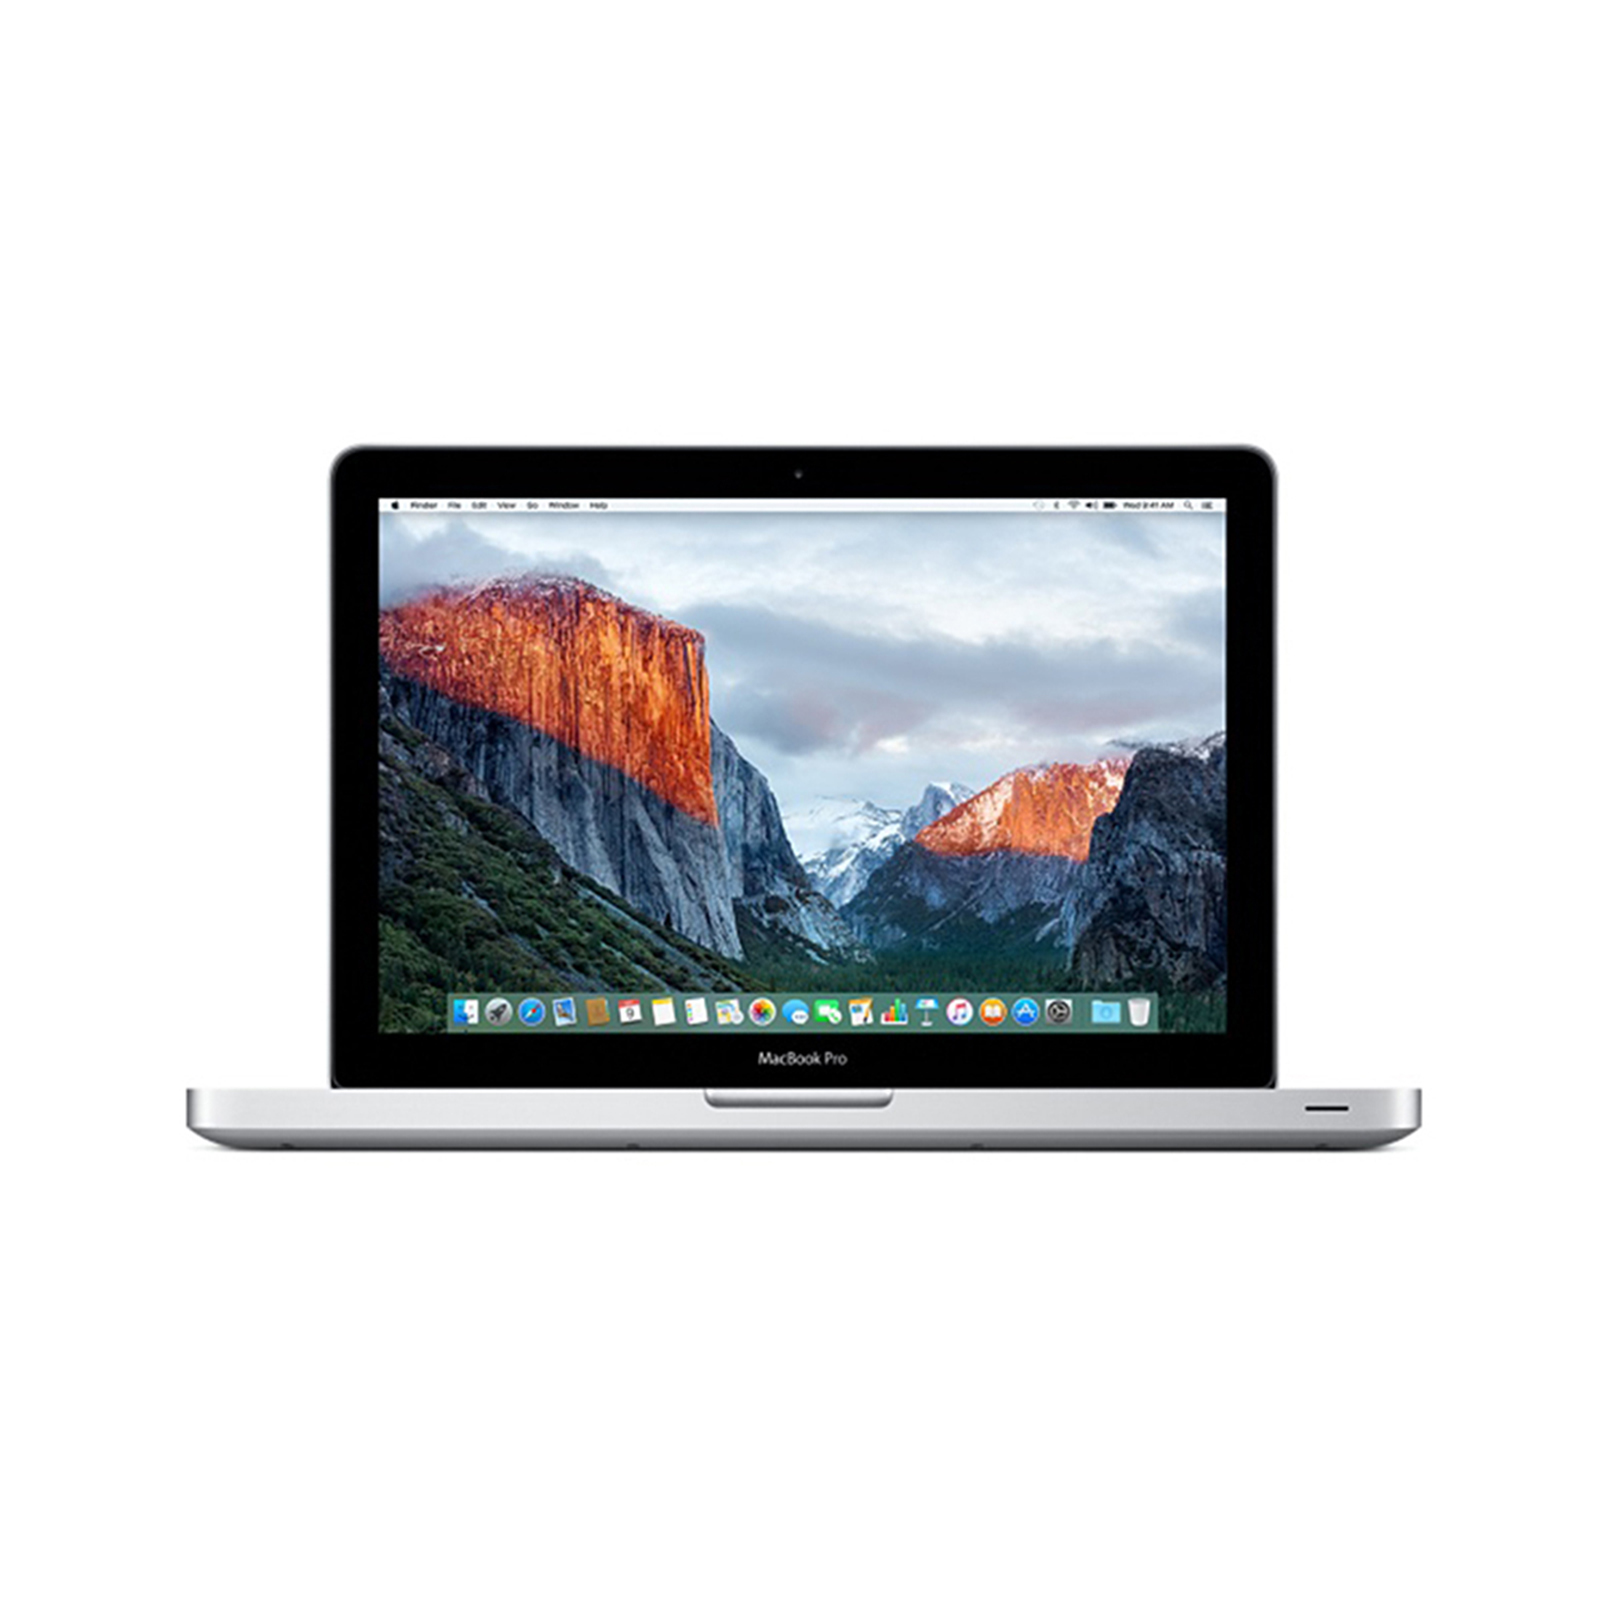 macbook pro 2012 price 13 inch